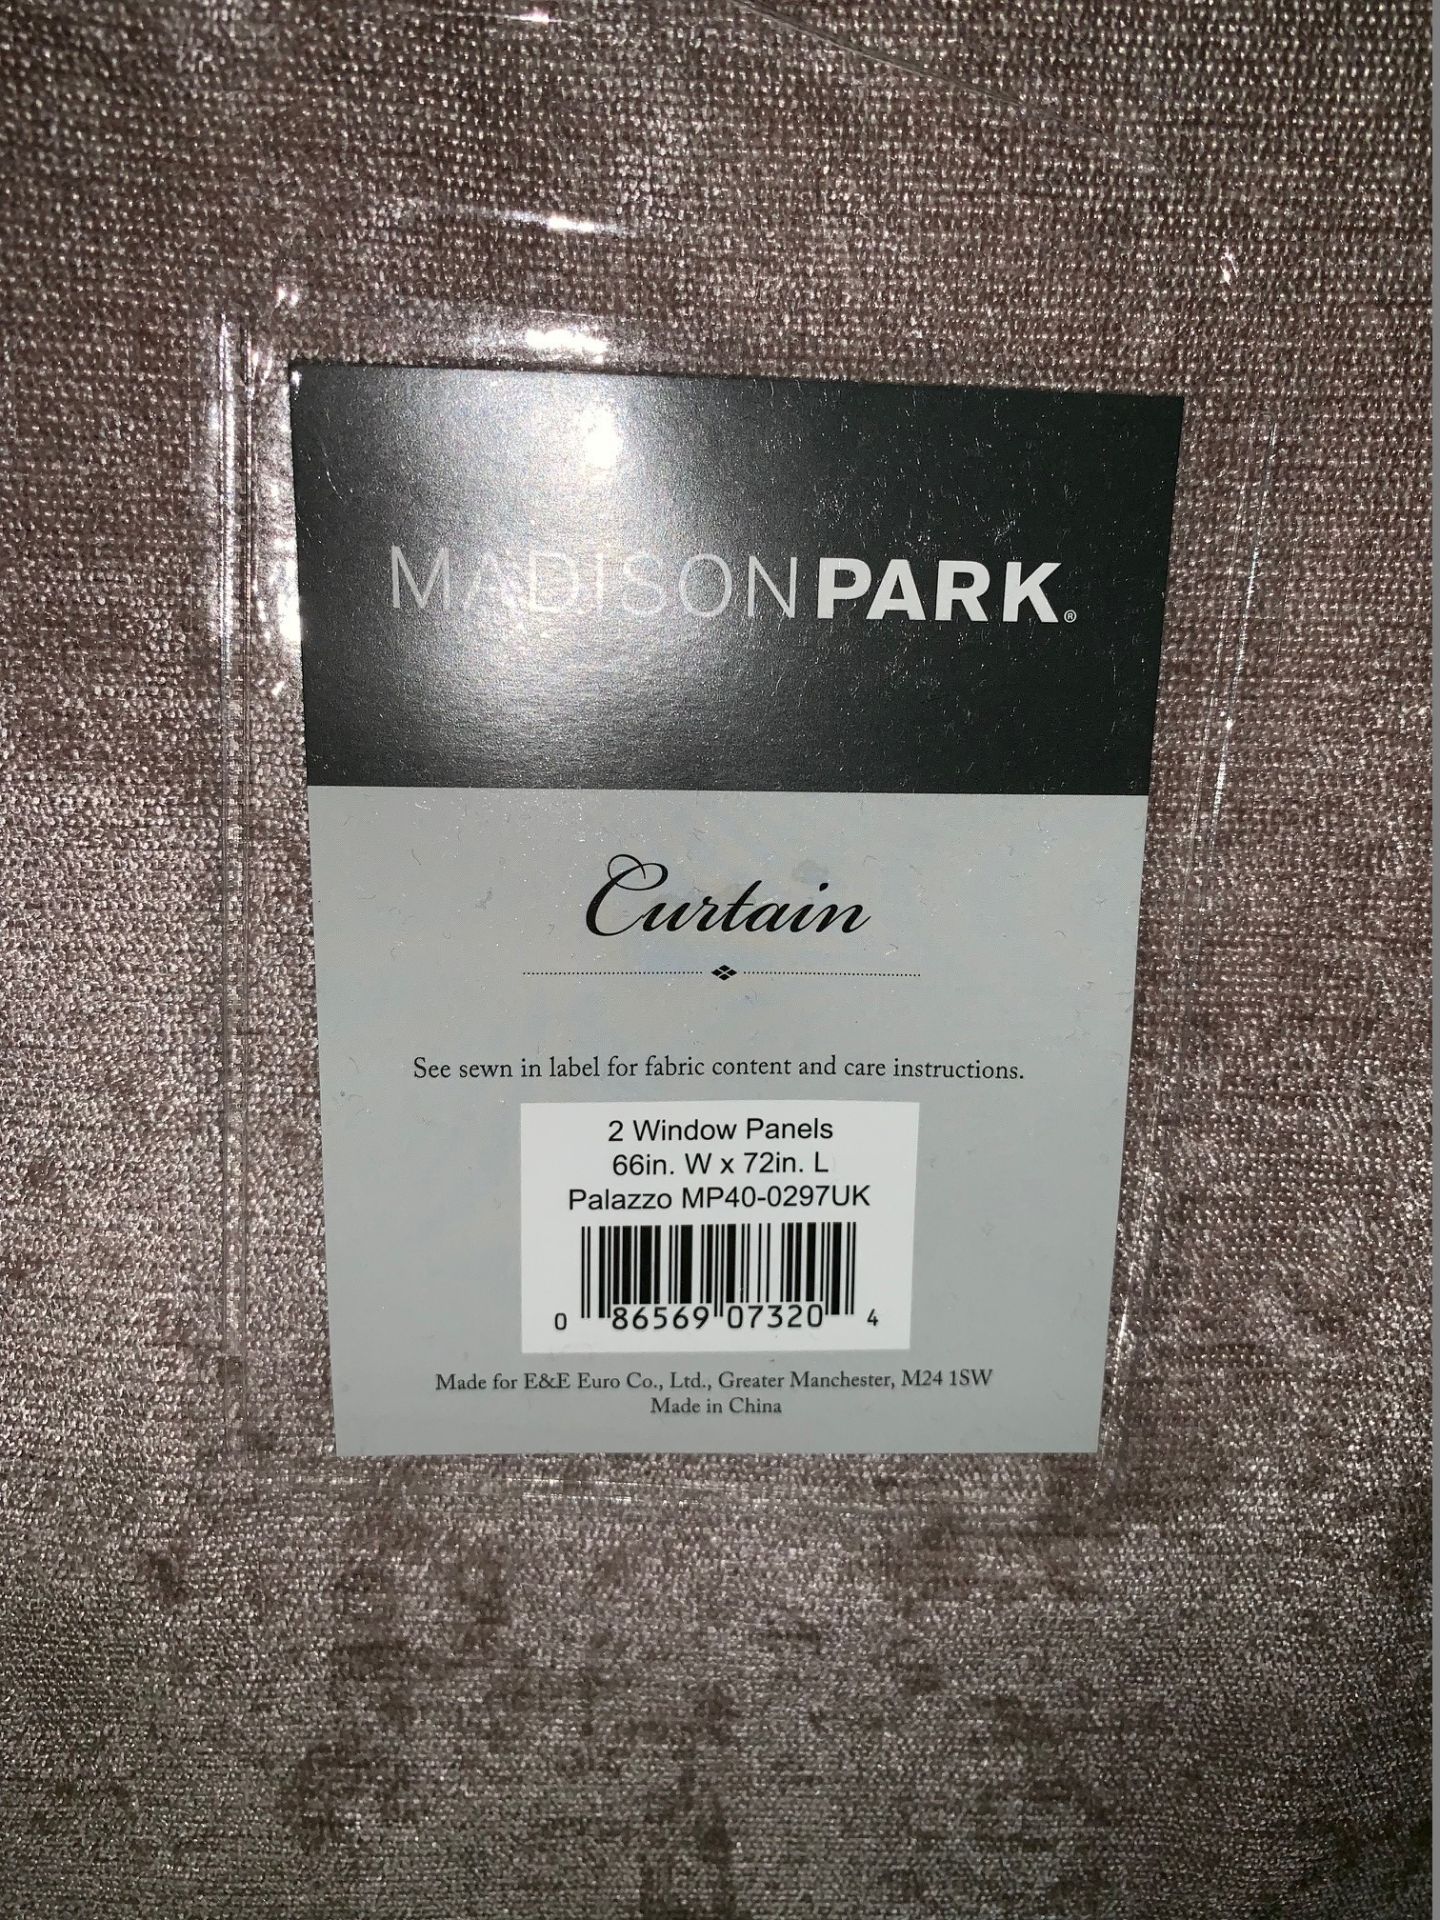 1 x Set of Madison Park Palazzo Chenille Blush Curtains 66x72" - Product Code MP40-0297UK (Brand New - Image 3 of 3